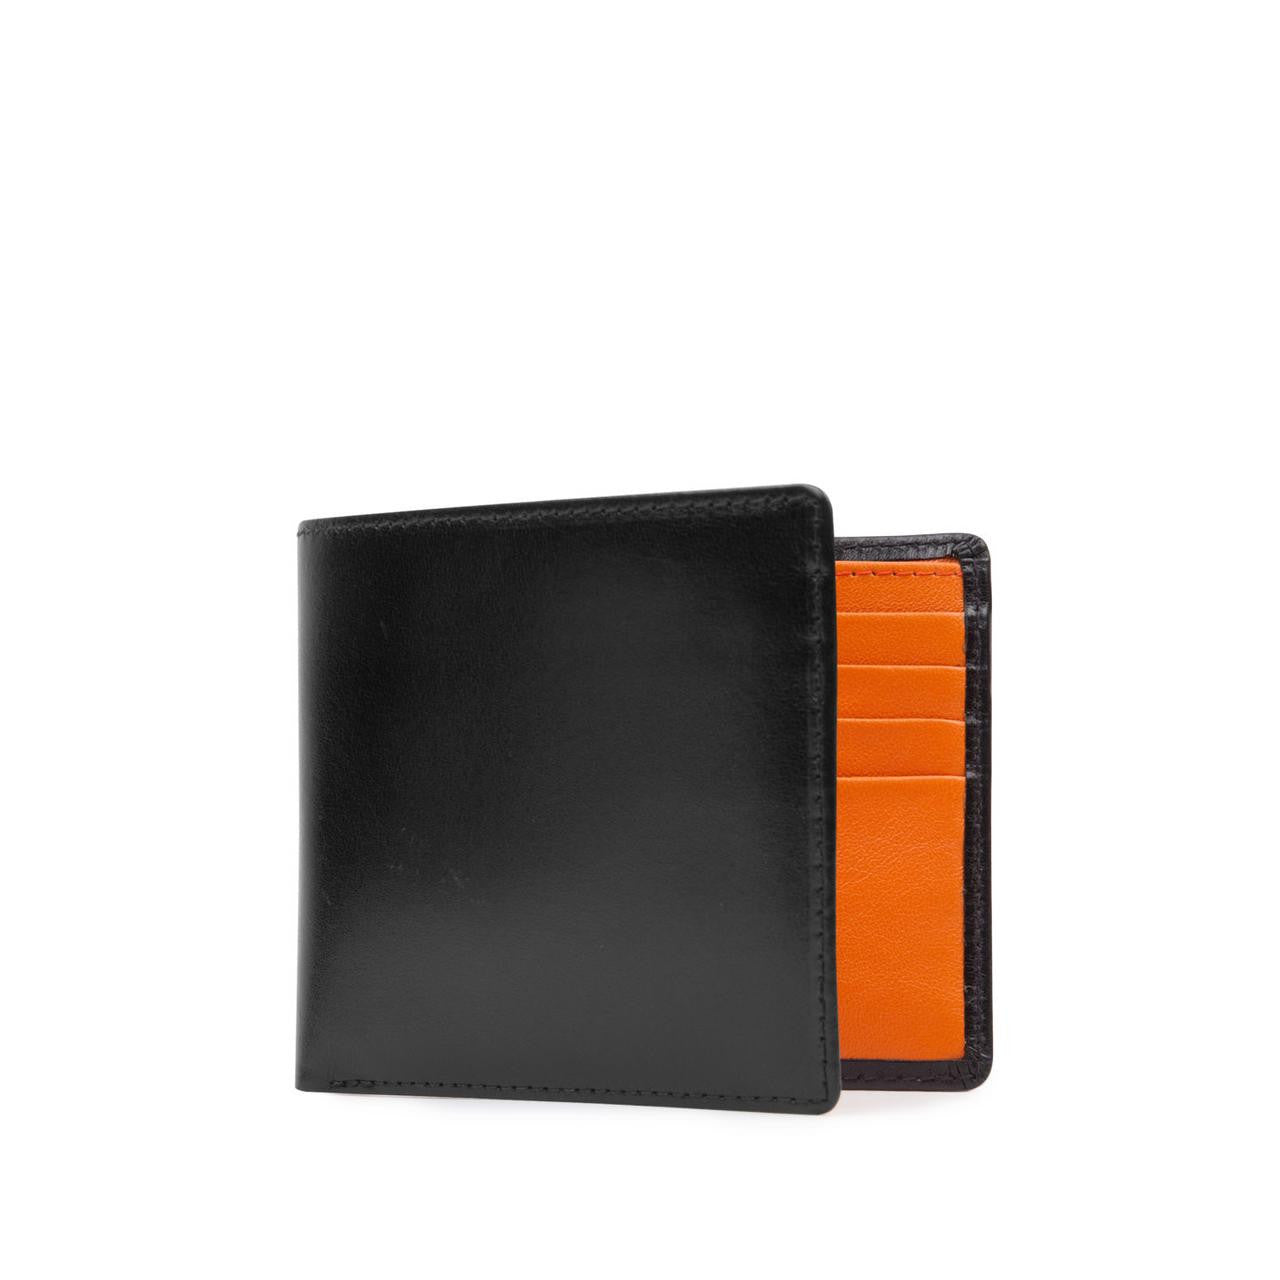 Launer Eight Credit Card Wallet, Black/Orange